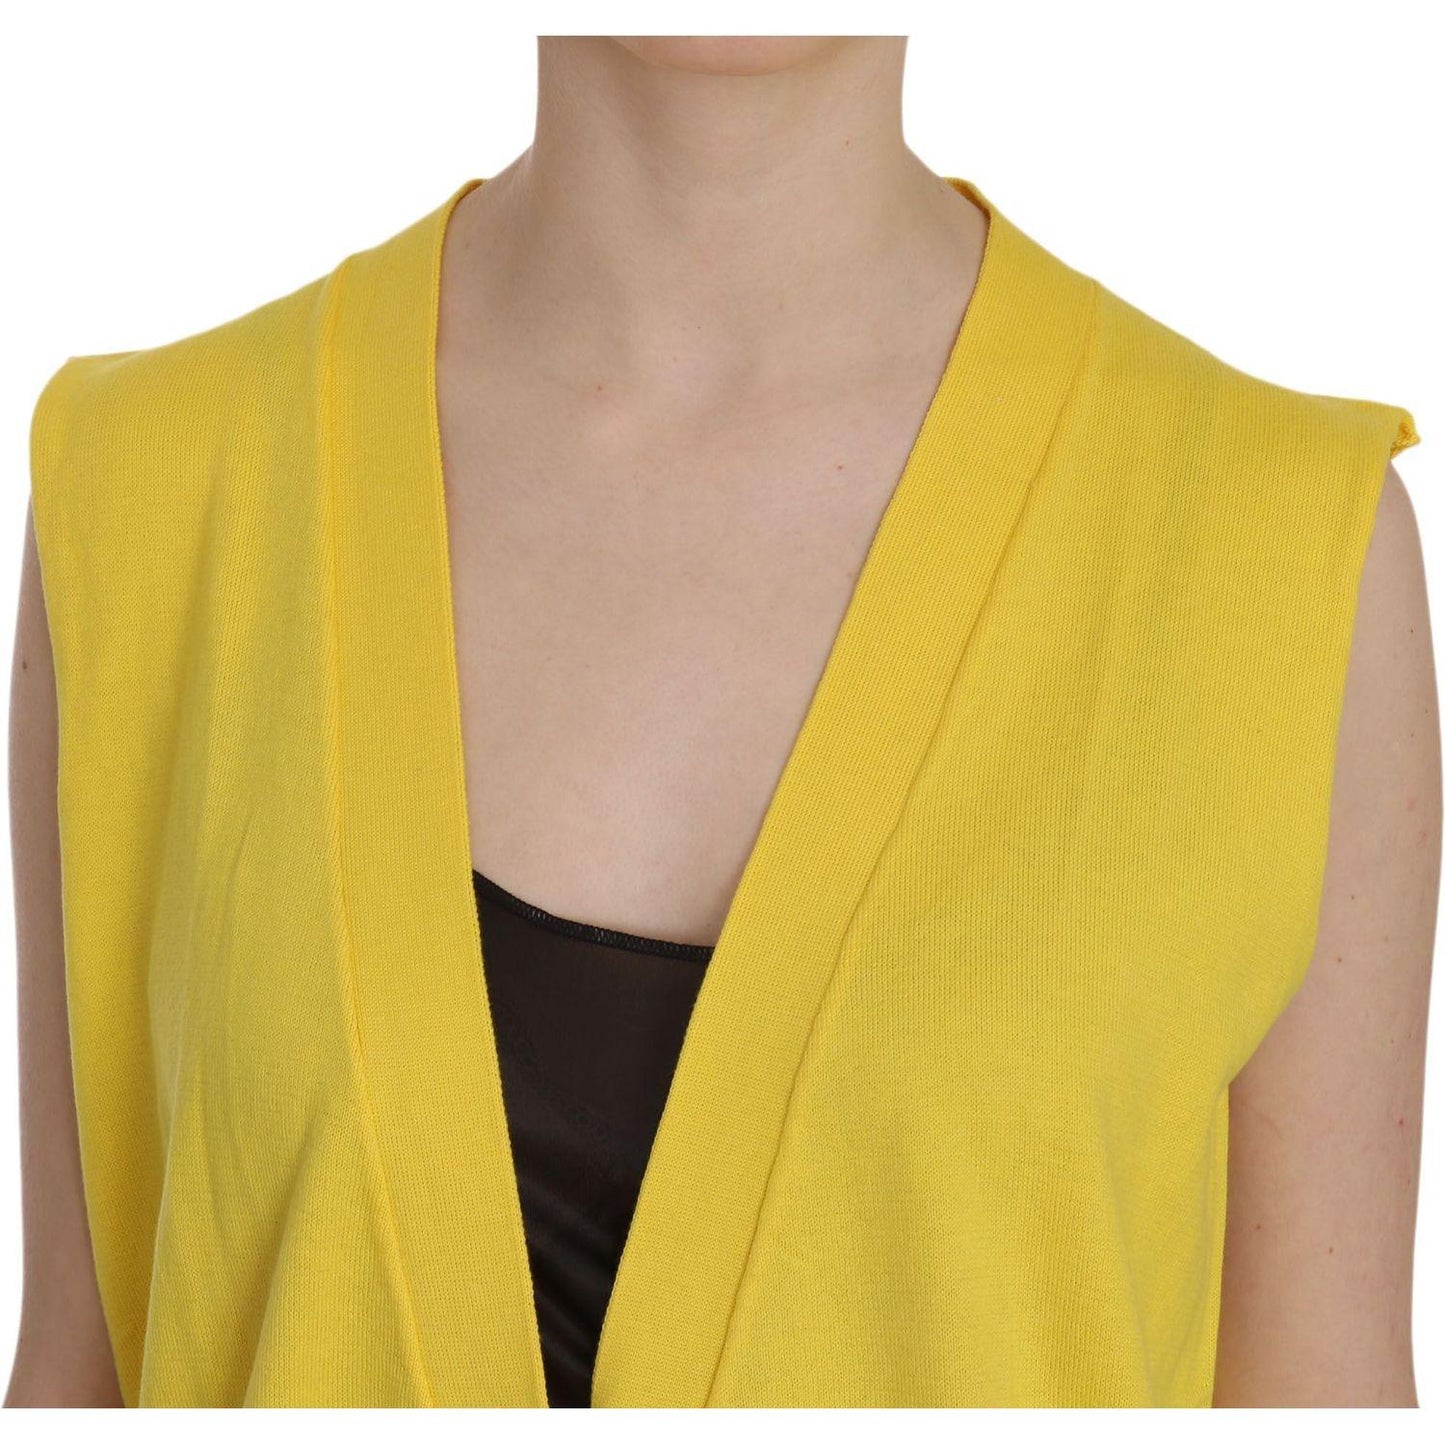 PINK MEMORIES Elegant Yellow Sleeveless Cotton Vest yellow-100-cotton-sleeveless-cardigan-top-vest